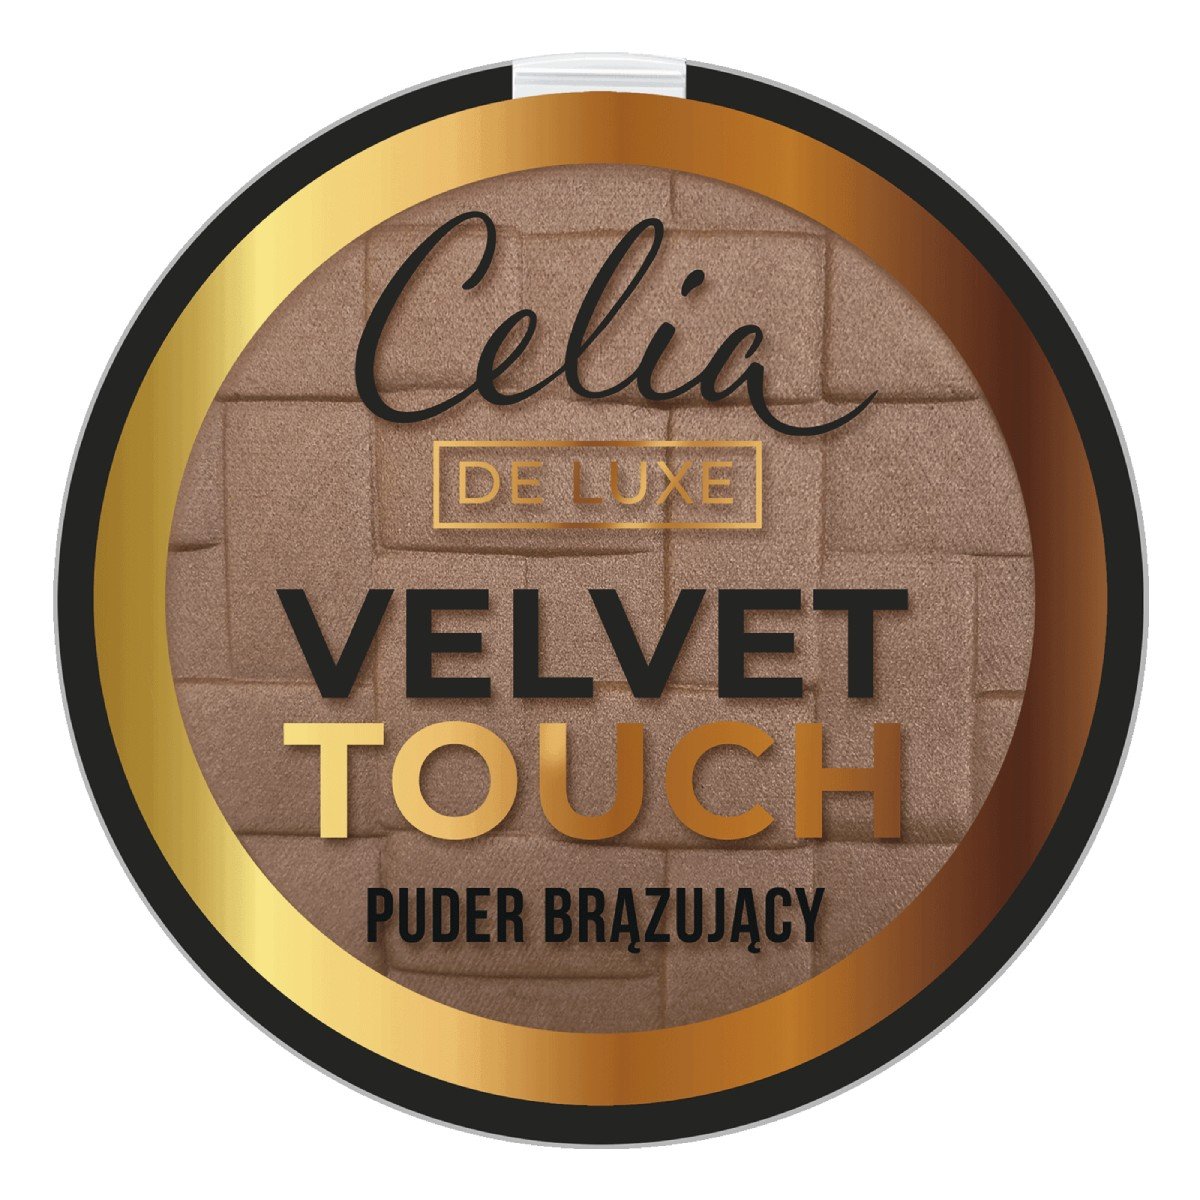 Фото - Пудра й рум'яна Celia , Velvet Touch, Puder brązujący 105, 9g 